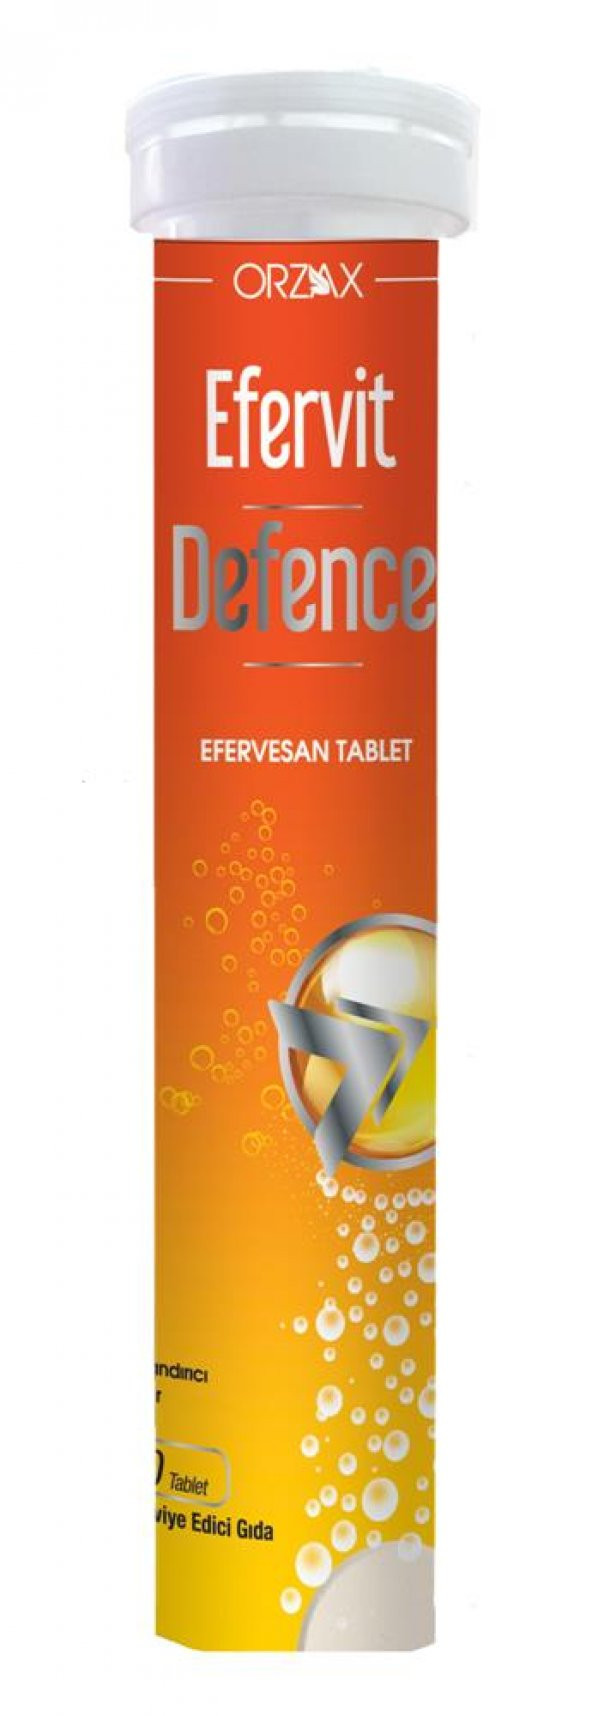 Orzax Efervit Defence 20 Efervesan Tablet